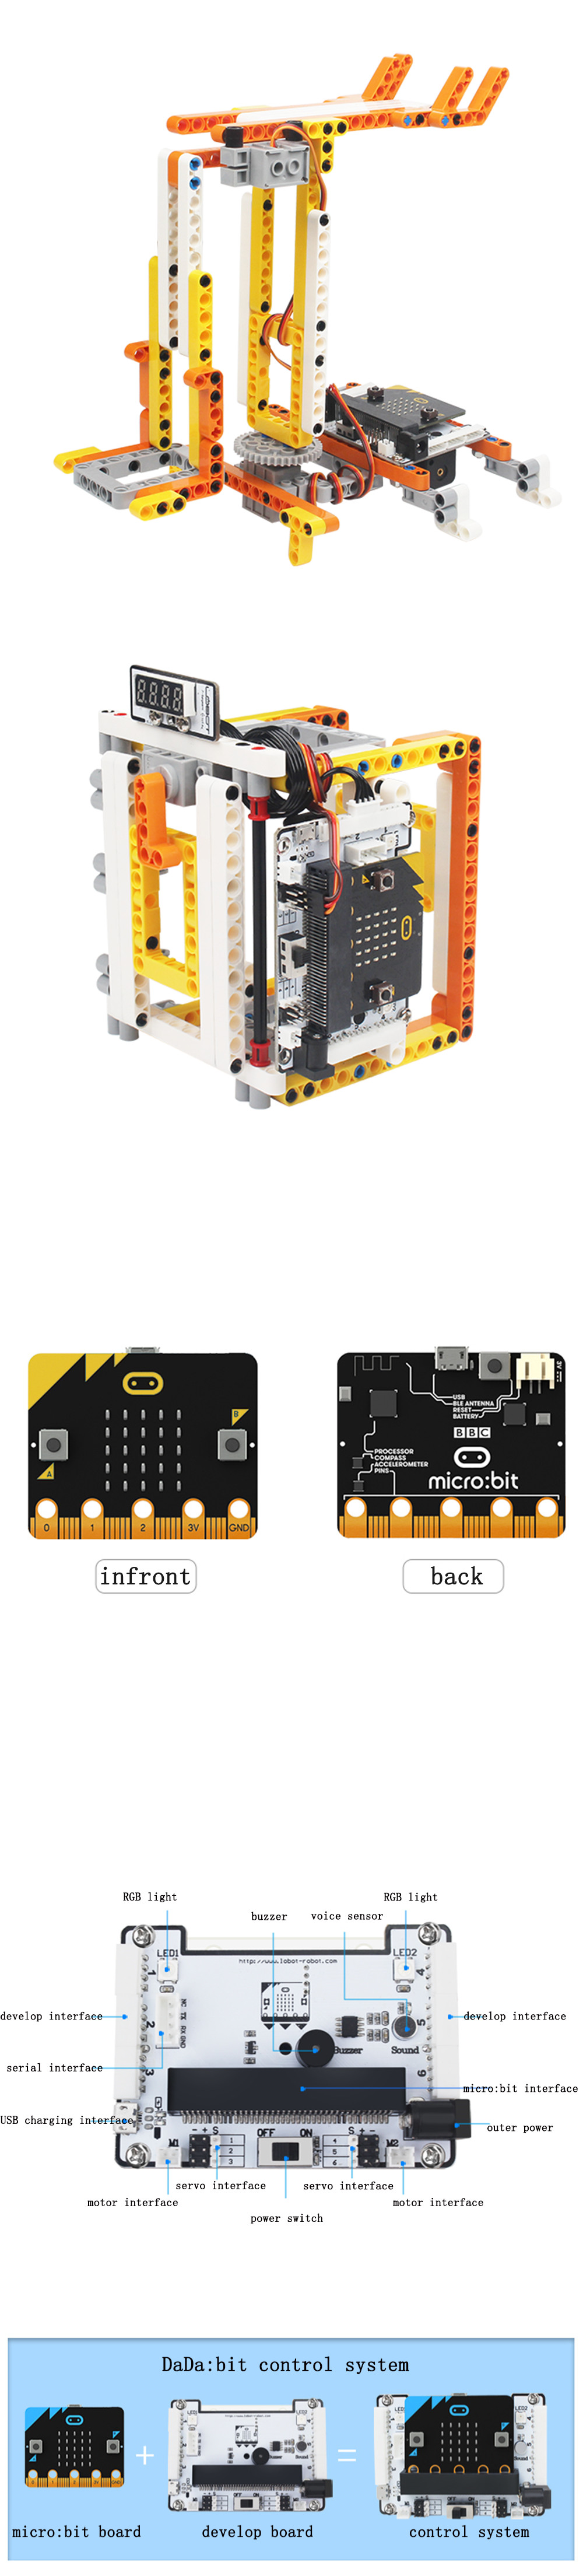 LOBOT-DaDabit-STEAM-DIY-Multifunctional-Programmable-RC-Robot-Educational-Kit-Compatible-Microbit-Py-1527726-9